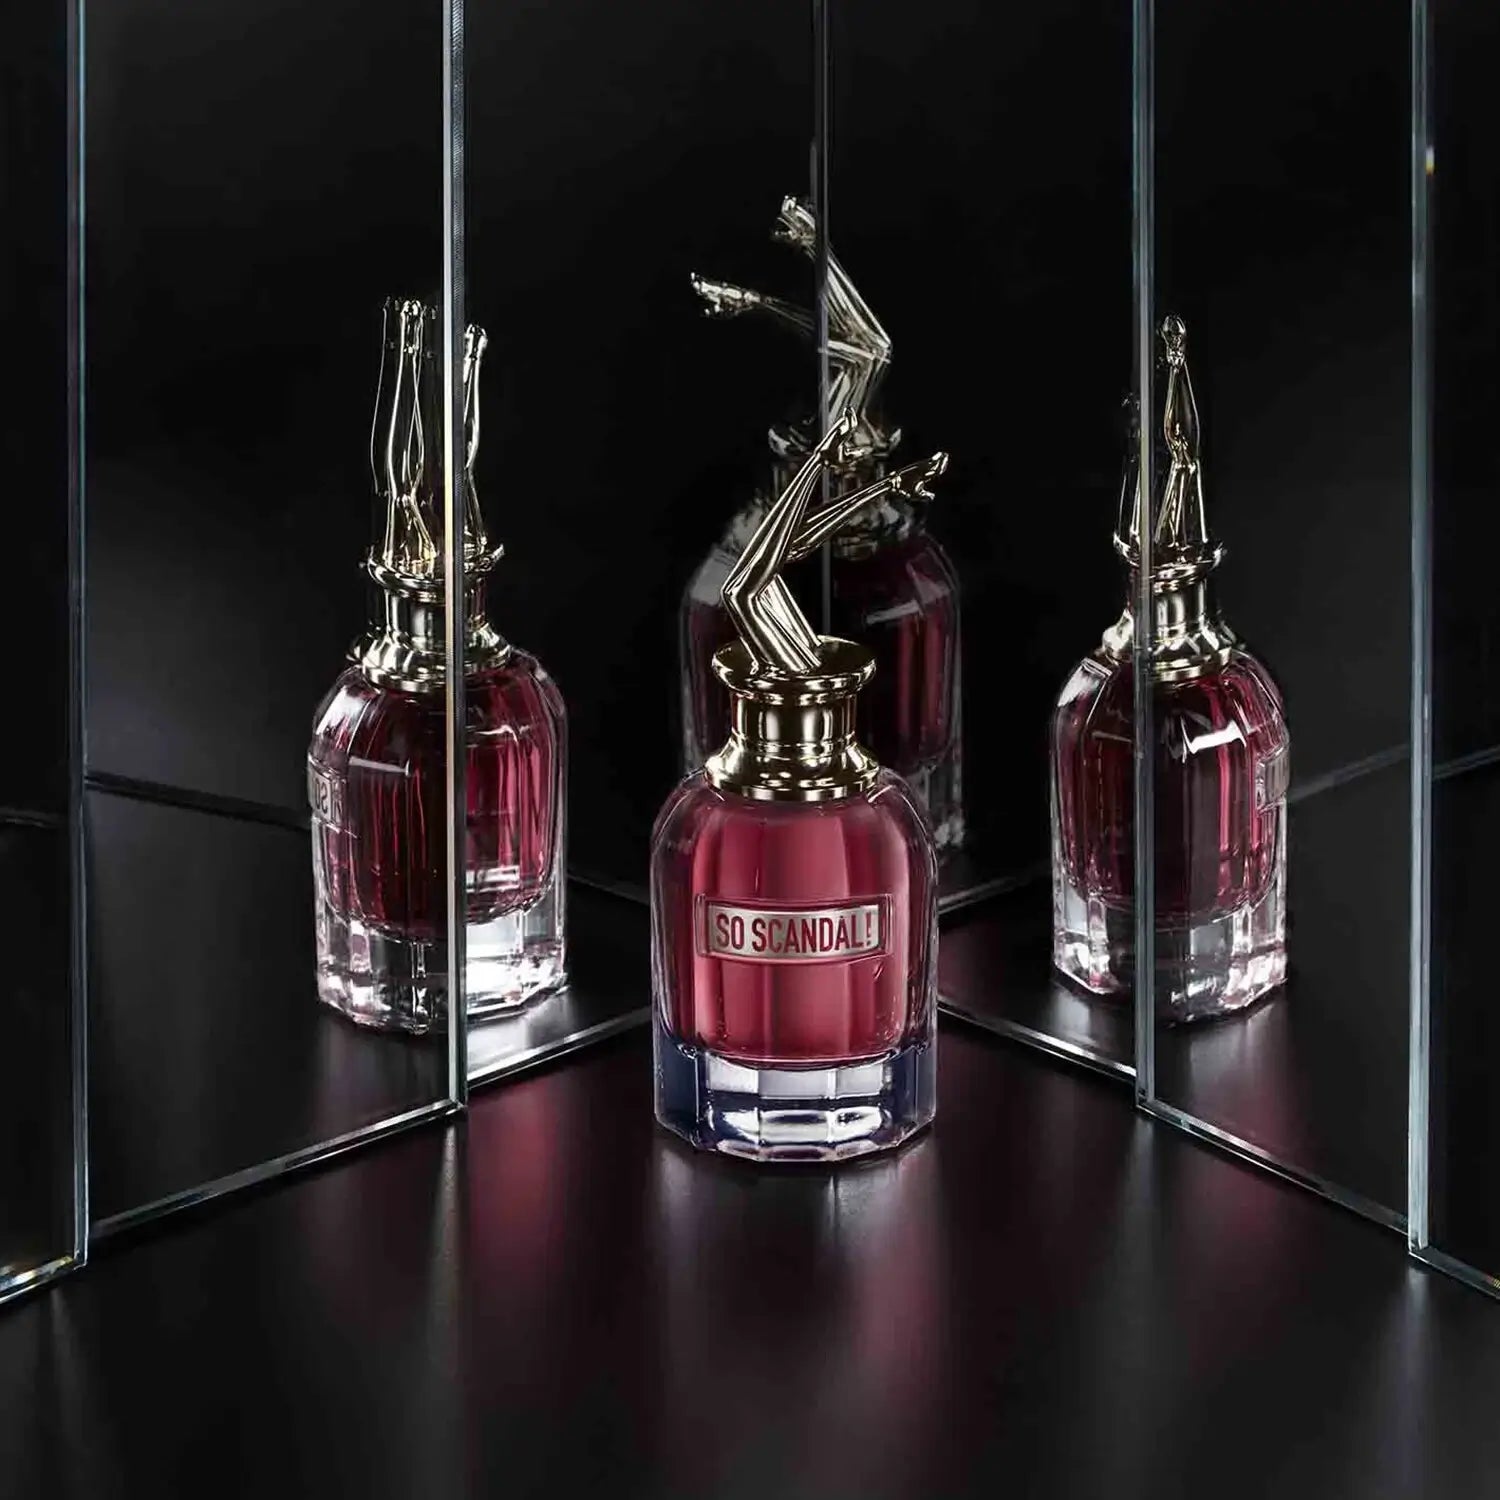 Jean Paul Gaultier So Scandal For Women Eau De Parfum